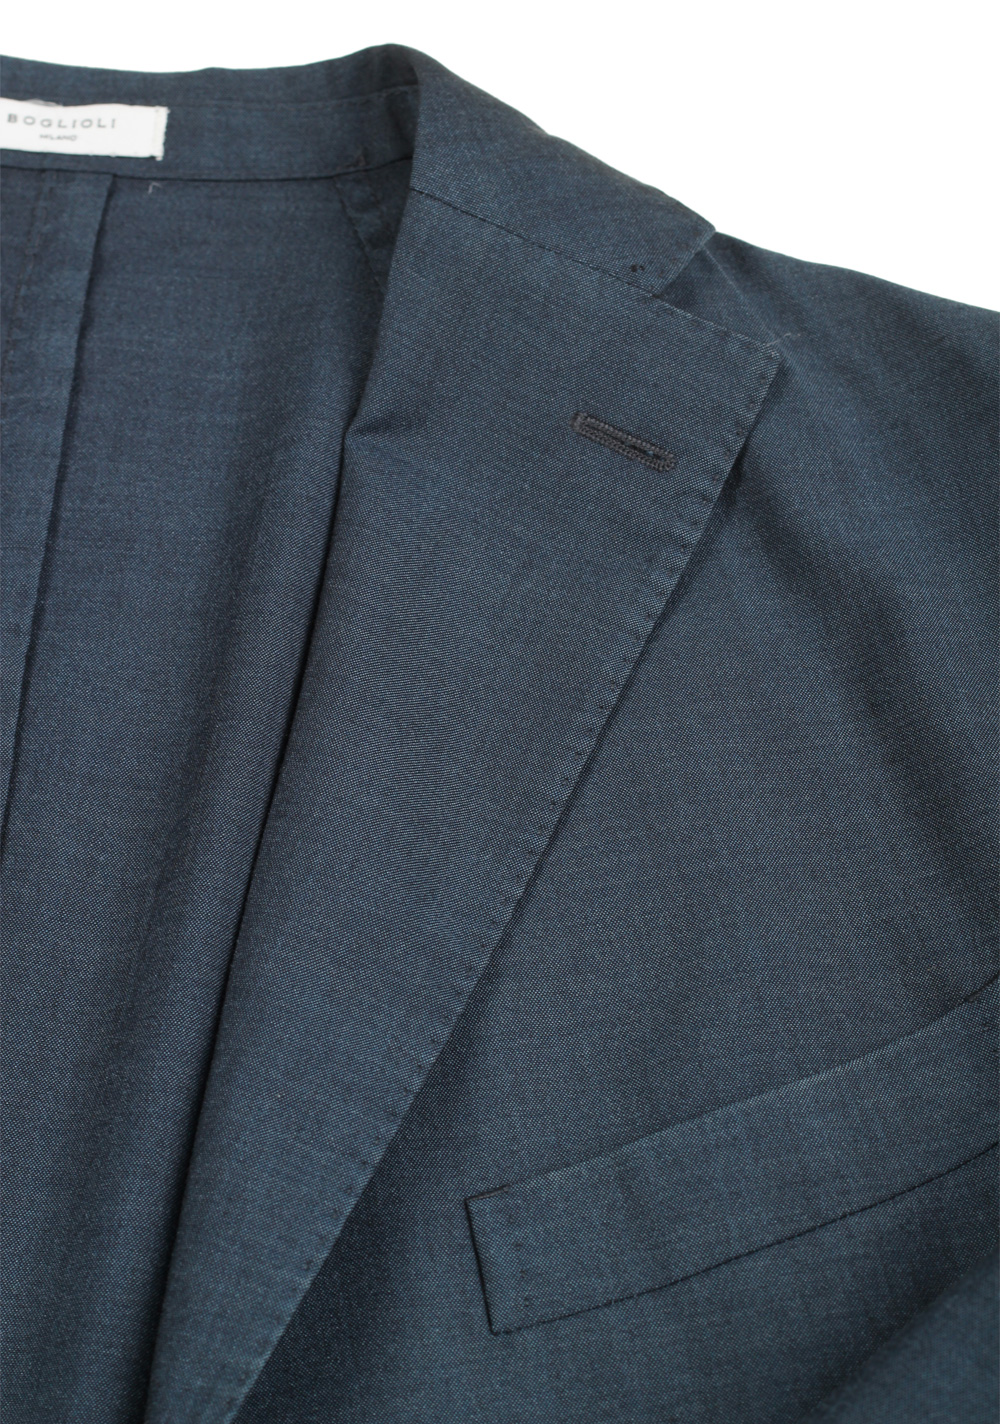 Boglioli K Jacket Blue Suit Size 54 / 44R U.S. | Costume Limité